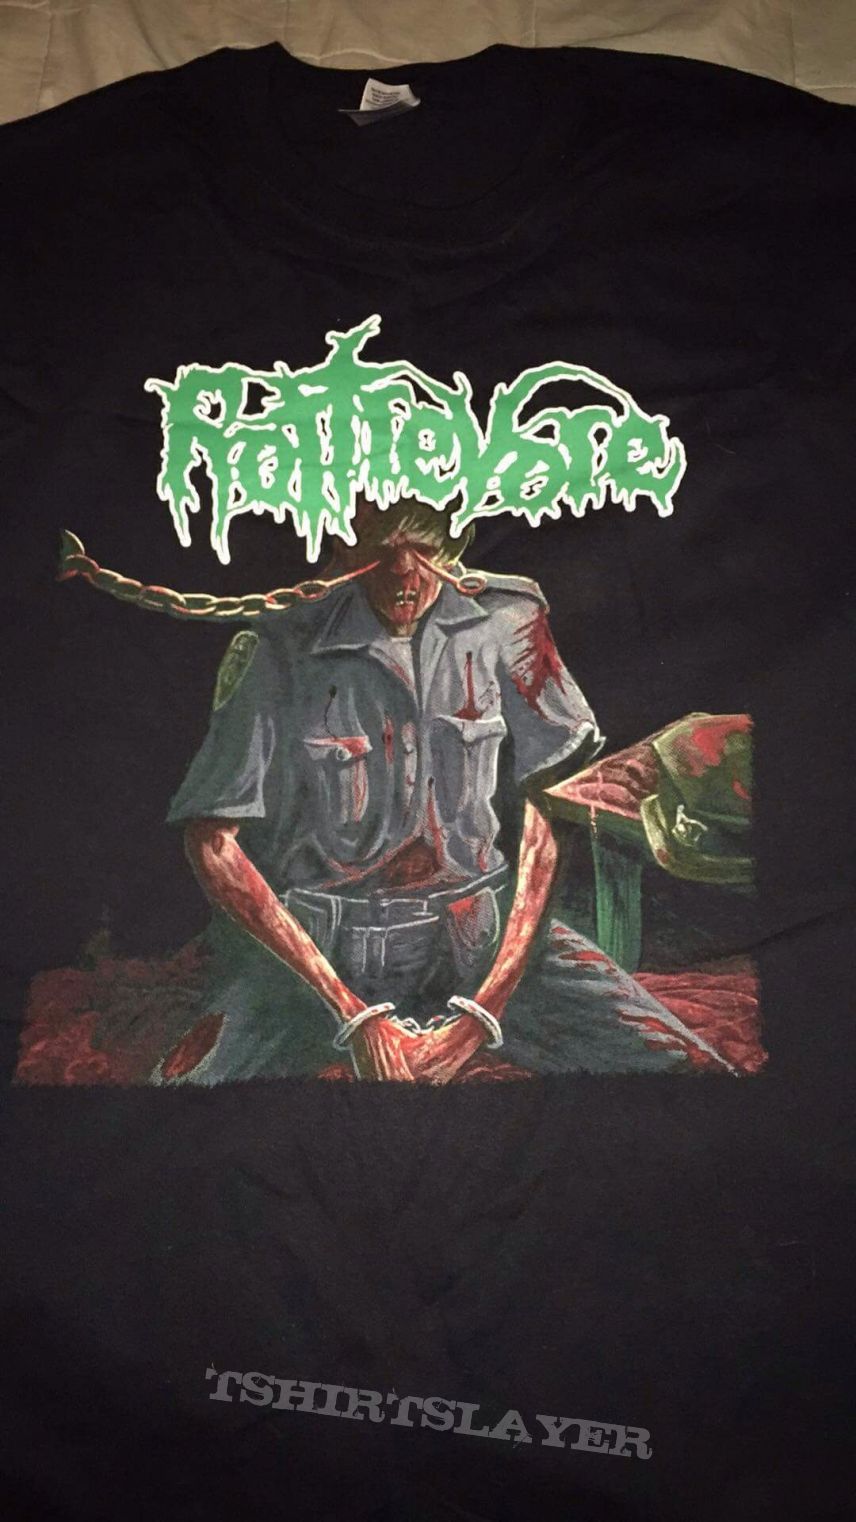 Rottrevore hung by the eyesockets 2013 Killtown Deathfest shirt